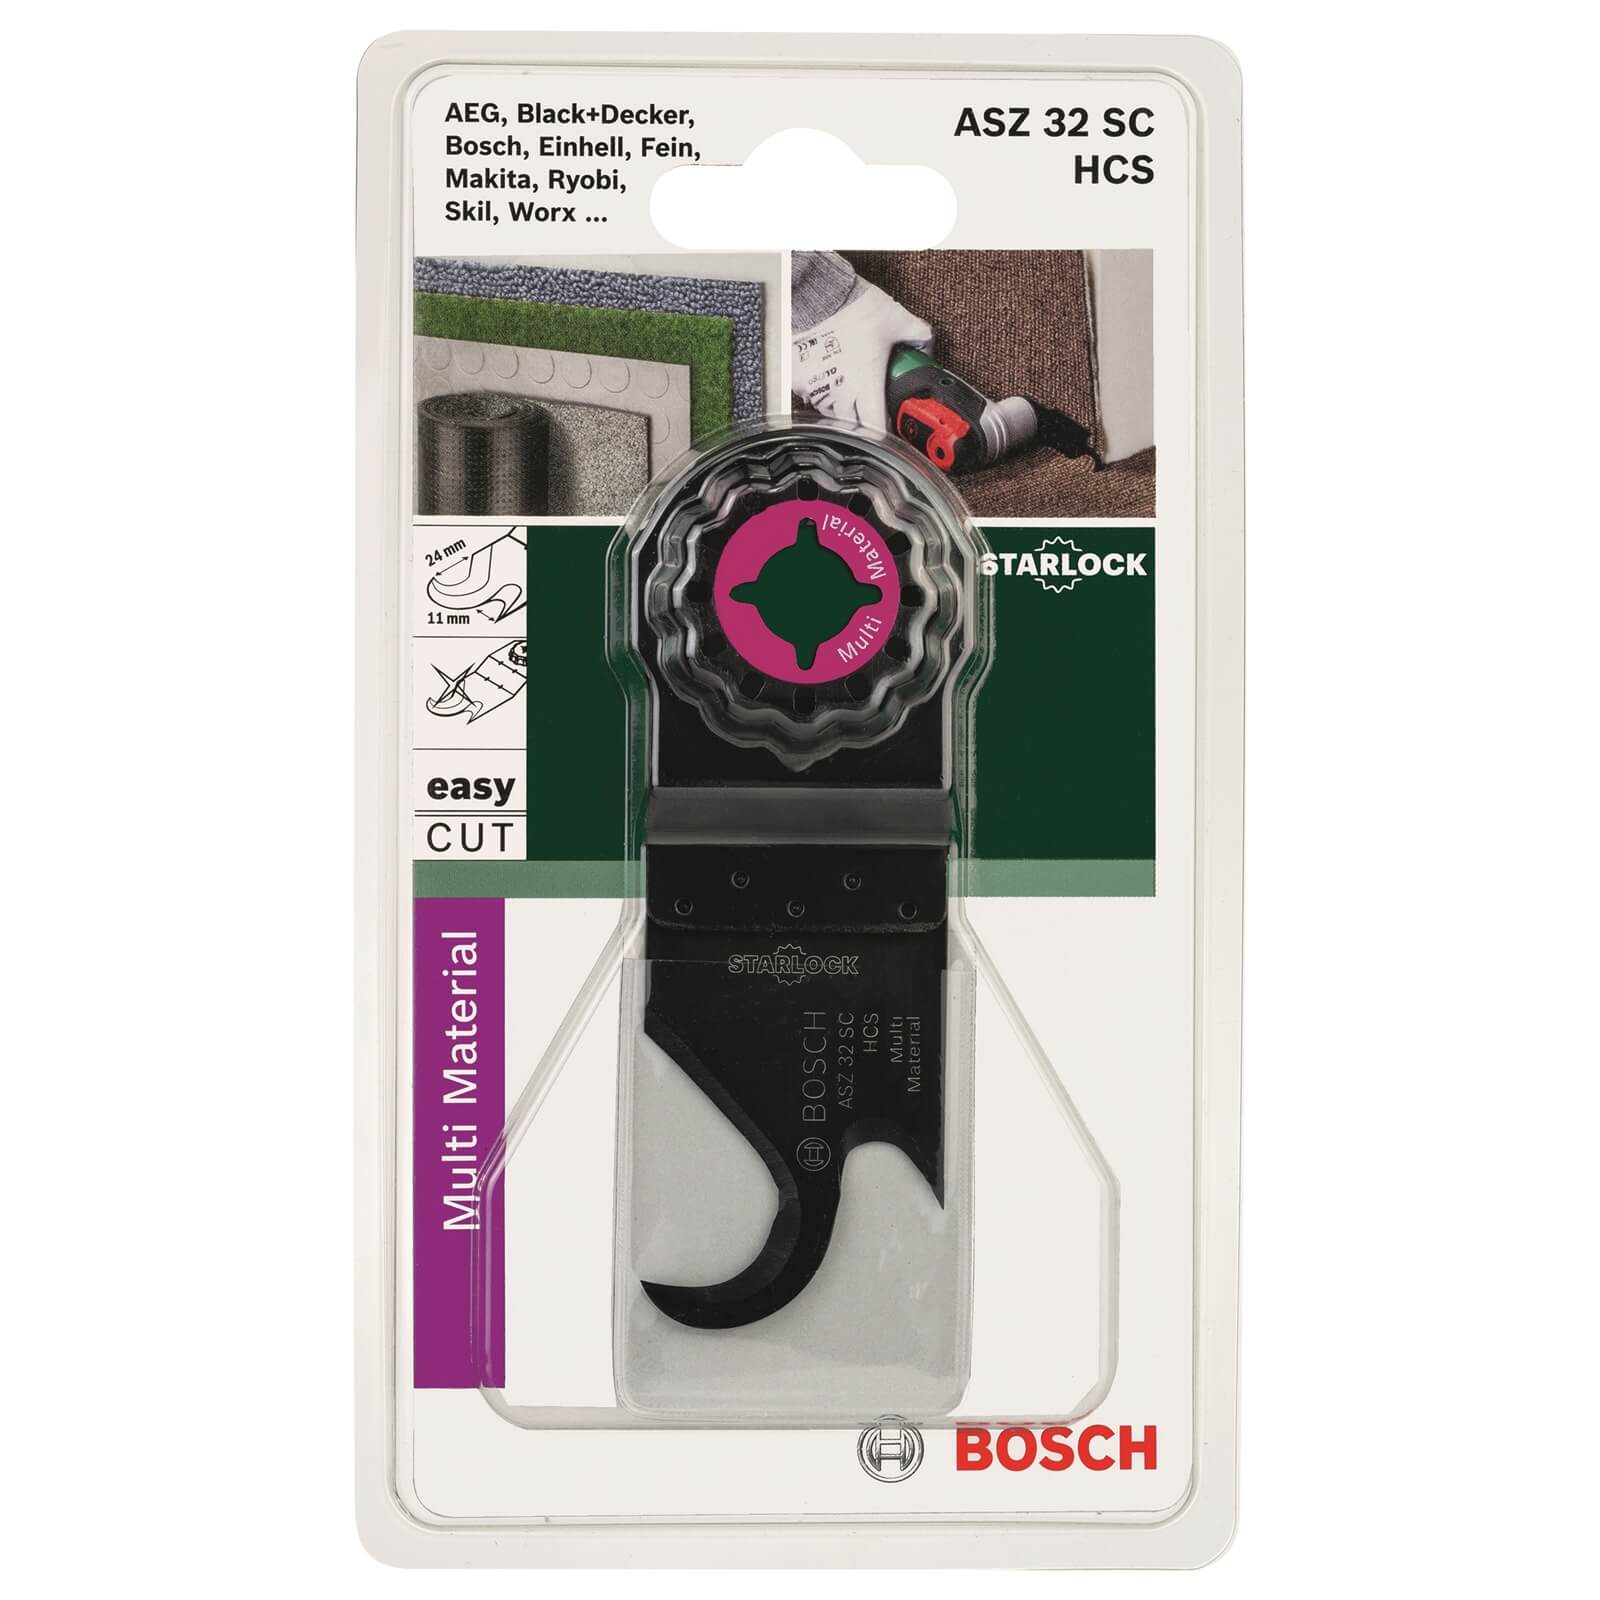 Photo of Bosch Multi Knife - Asz32sc